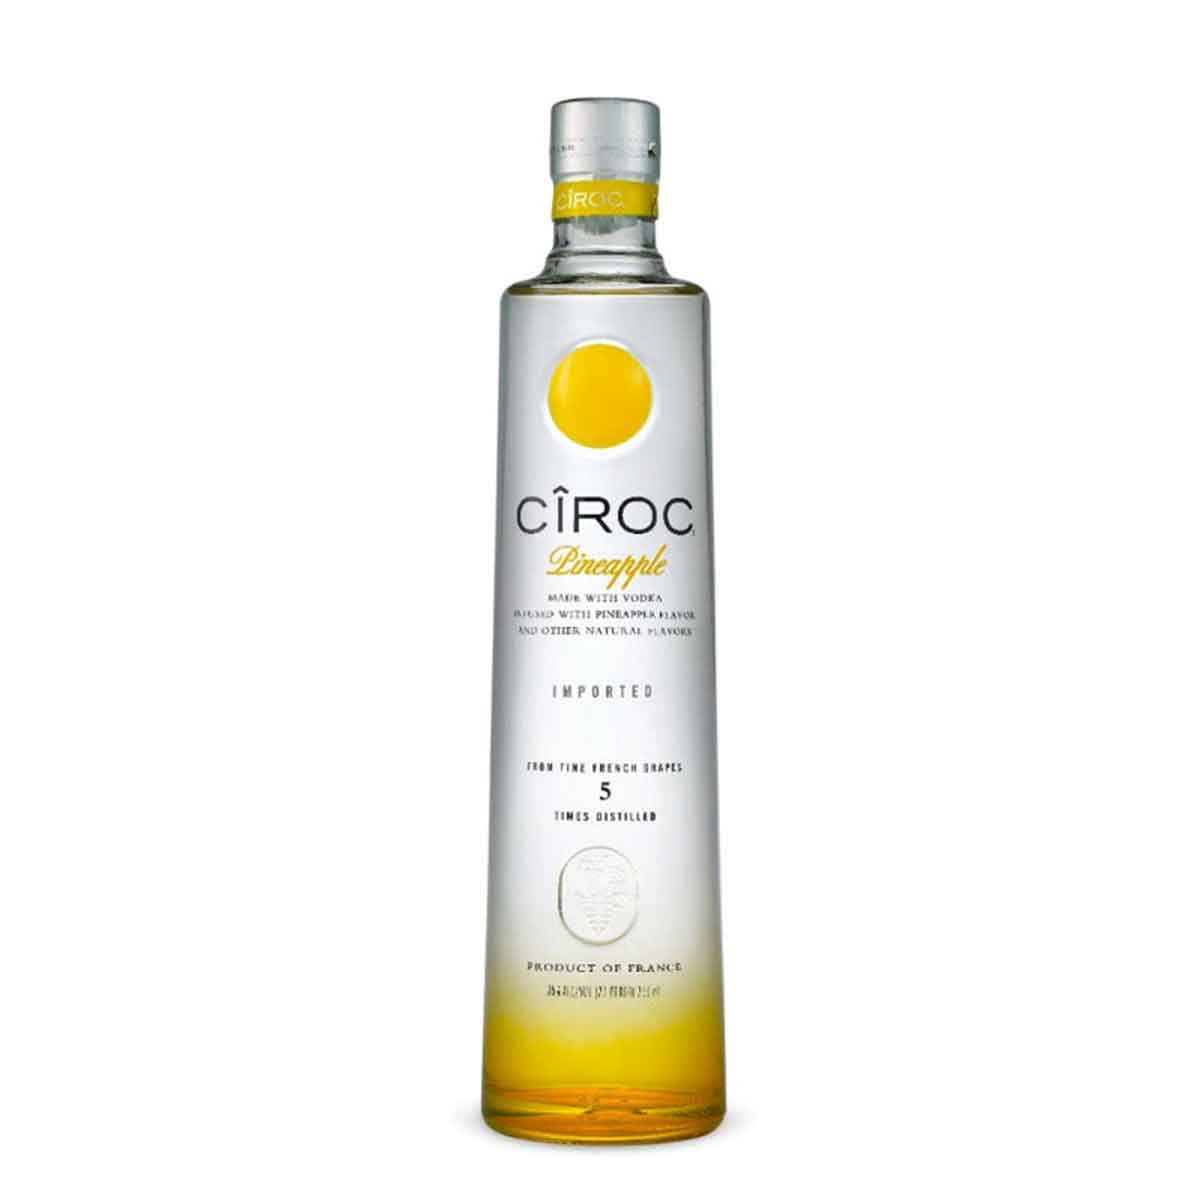 TAG Liquor Stores BC-Ciroc Pineapple Vodka 750ml